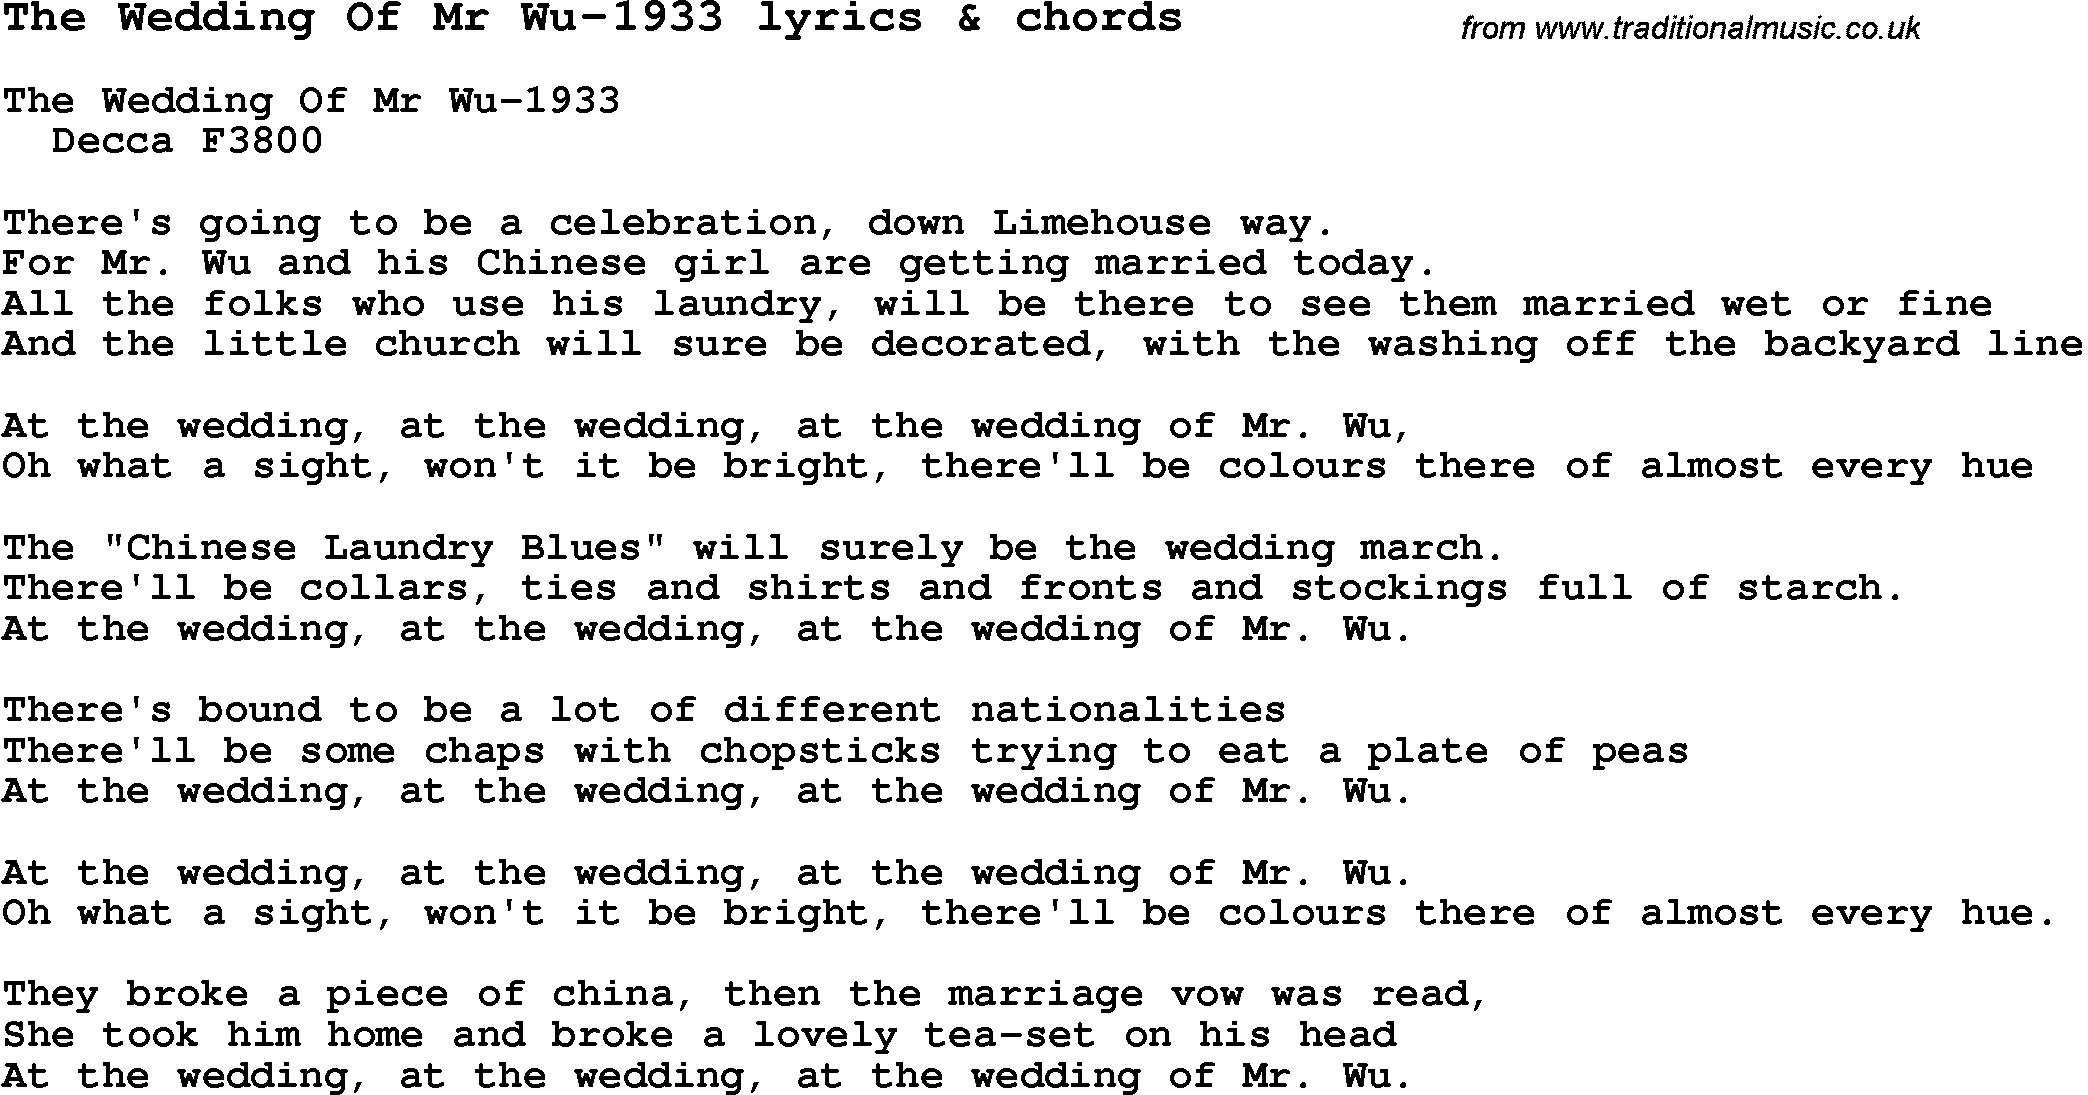 Love Song Lyrics for: The Wedding Of Mr Wu-1933 with chords for Ukulele, Guitar Banjo etc.